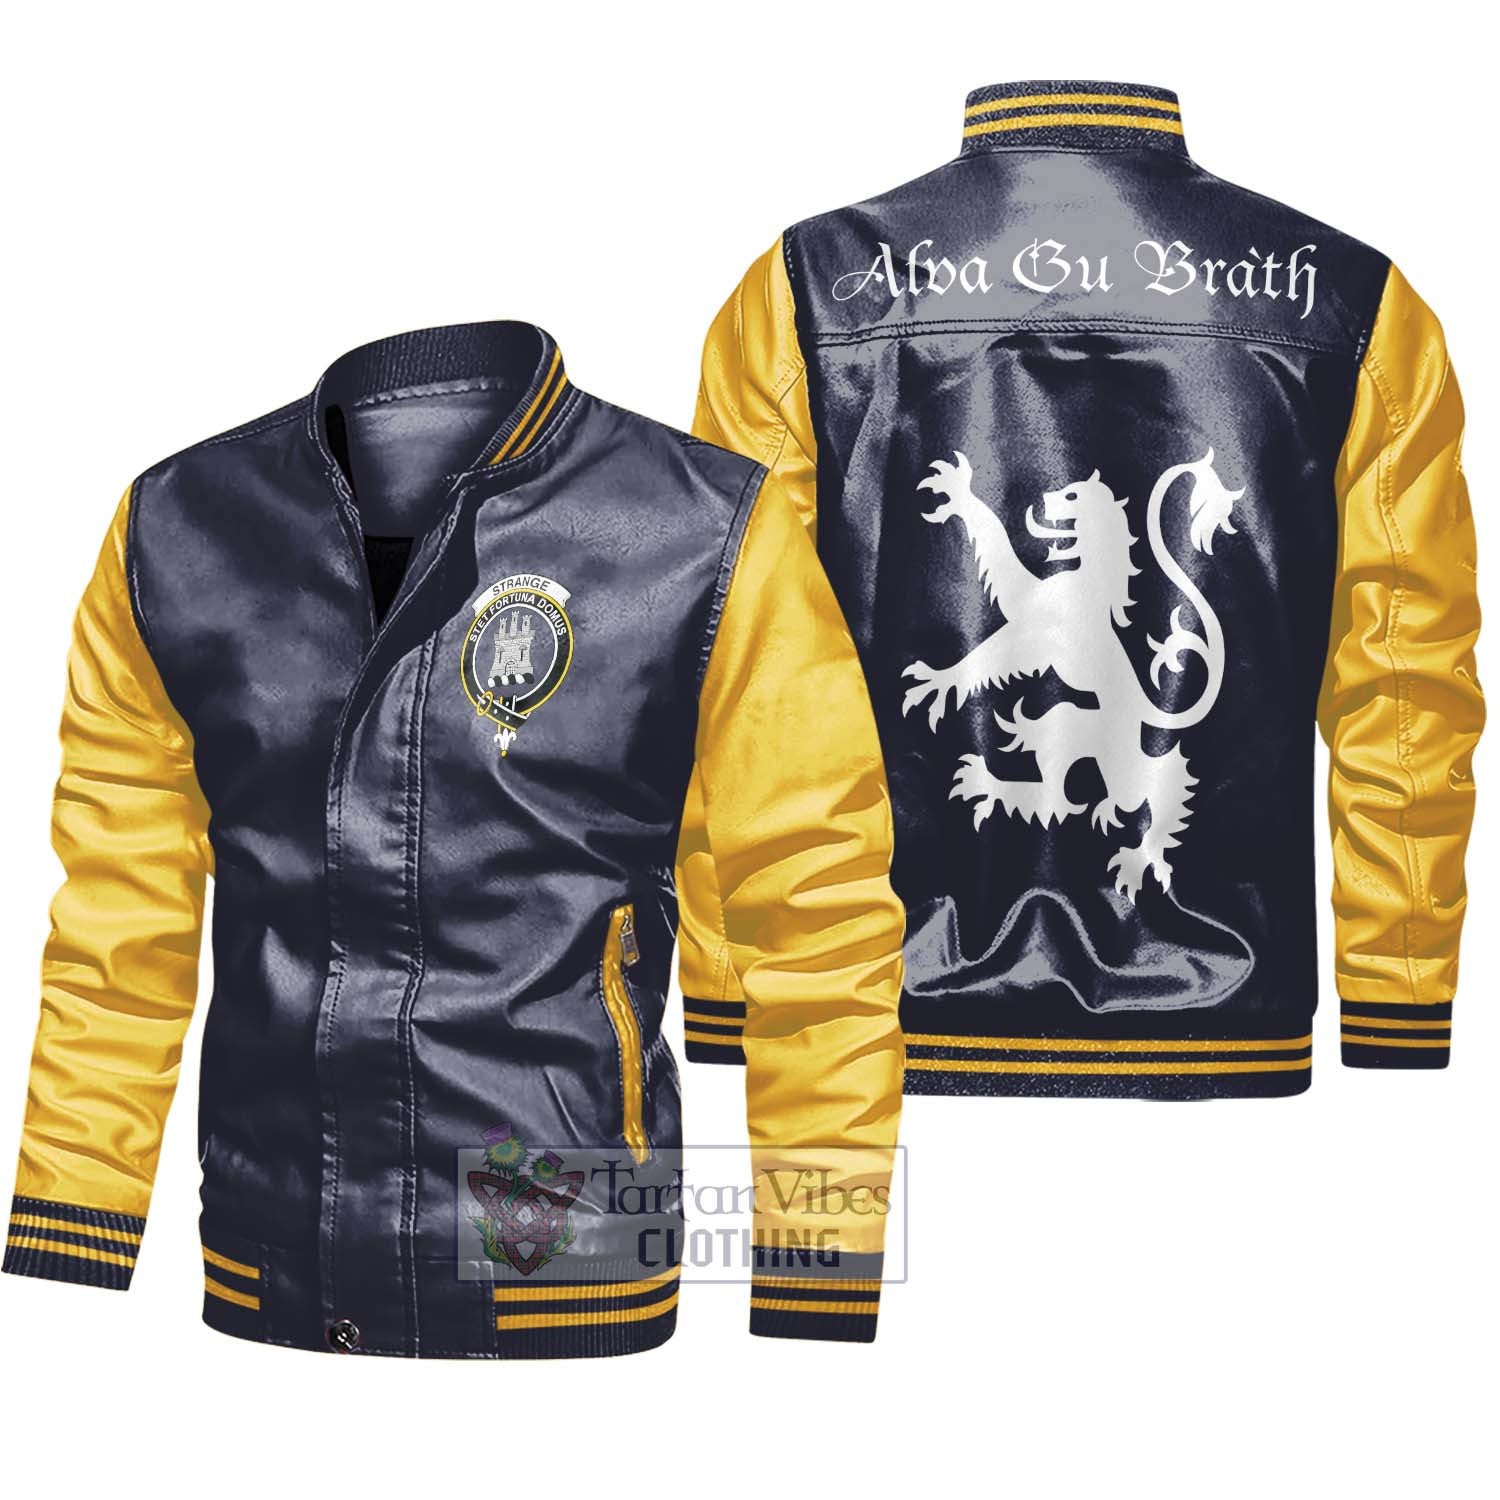 Tartan Vibes Clothing Strange Family Crest Leather Bomber Jacket Lion Rampant Alba Gu Brath Style